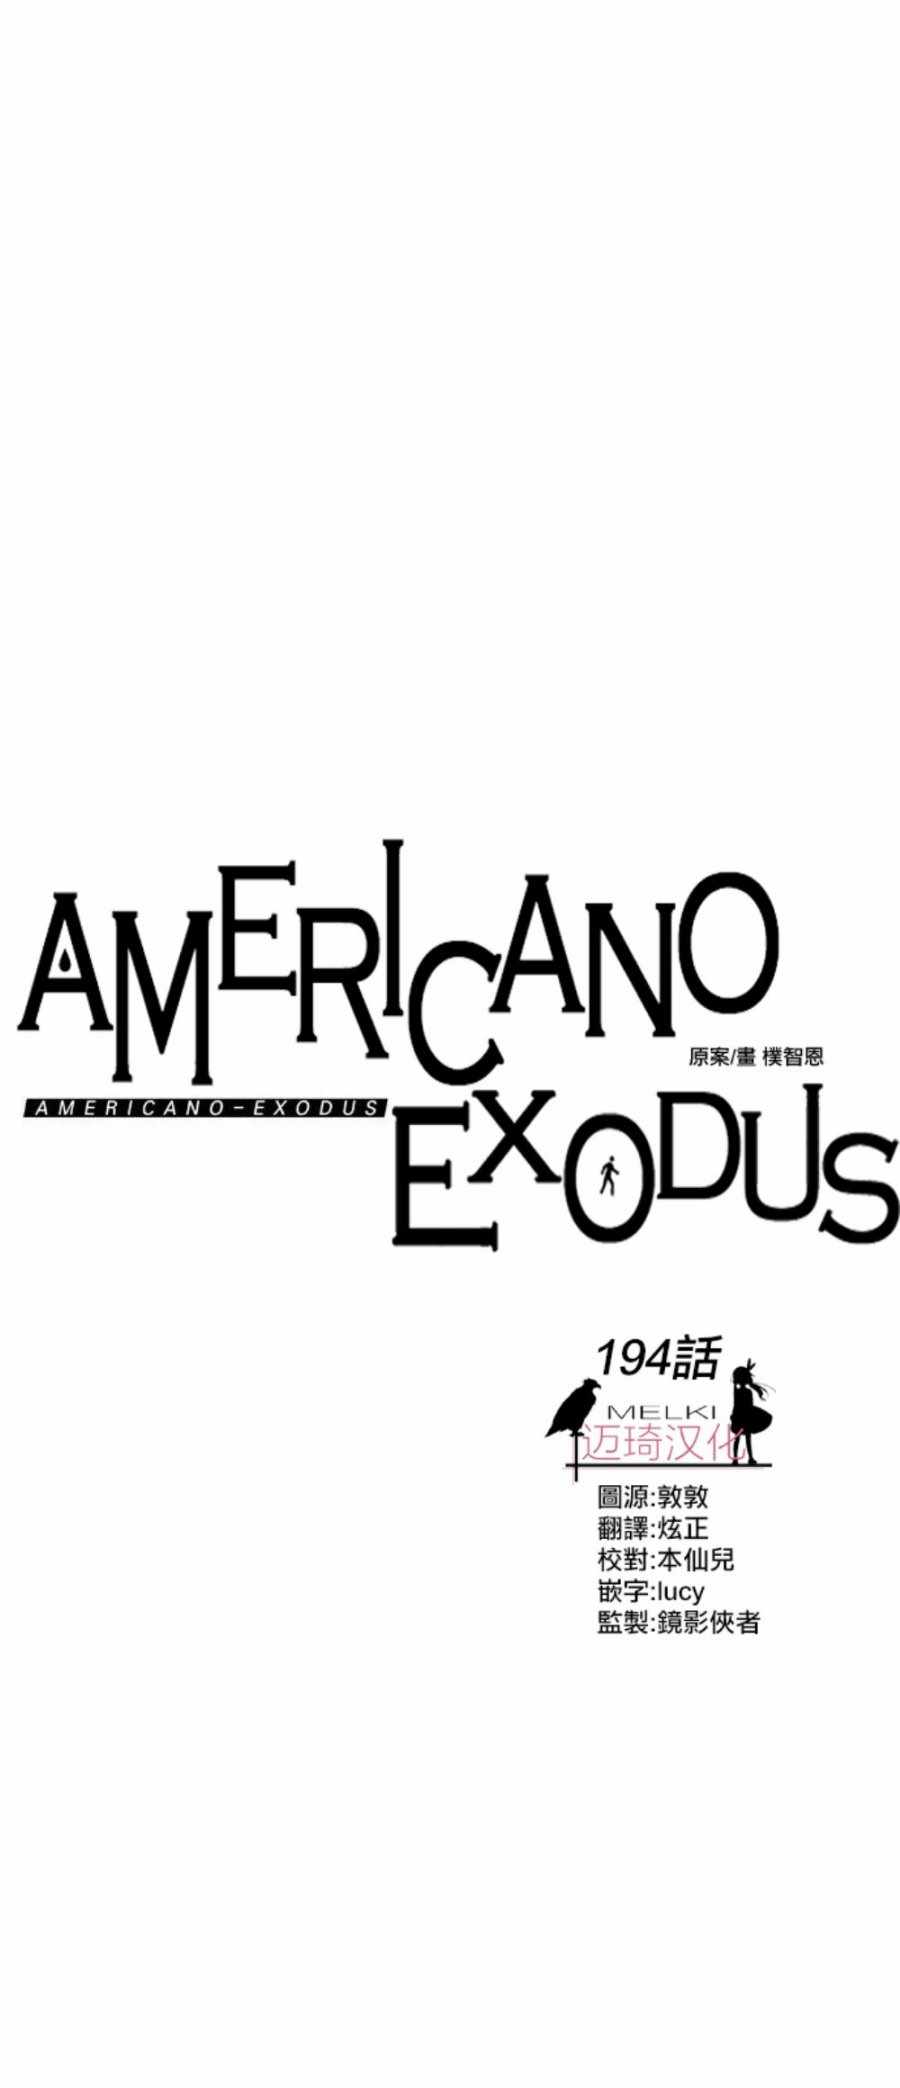 《Americano-exodus》漫画 exodus 194集